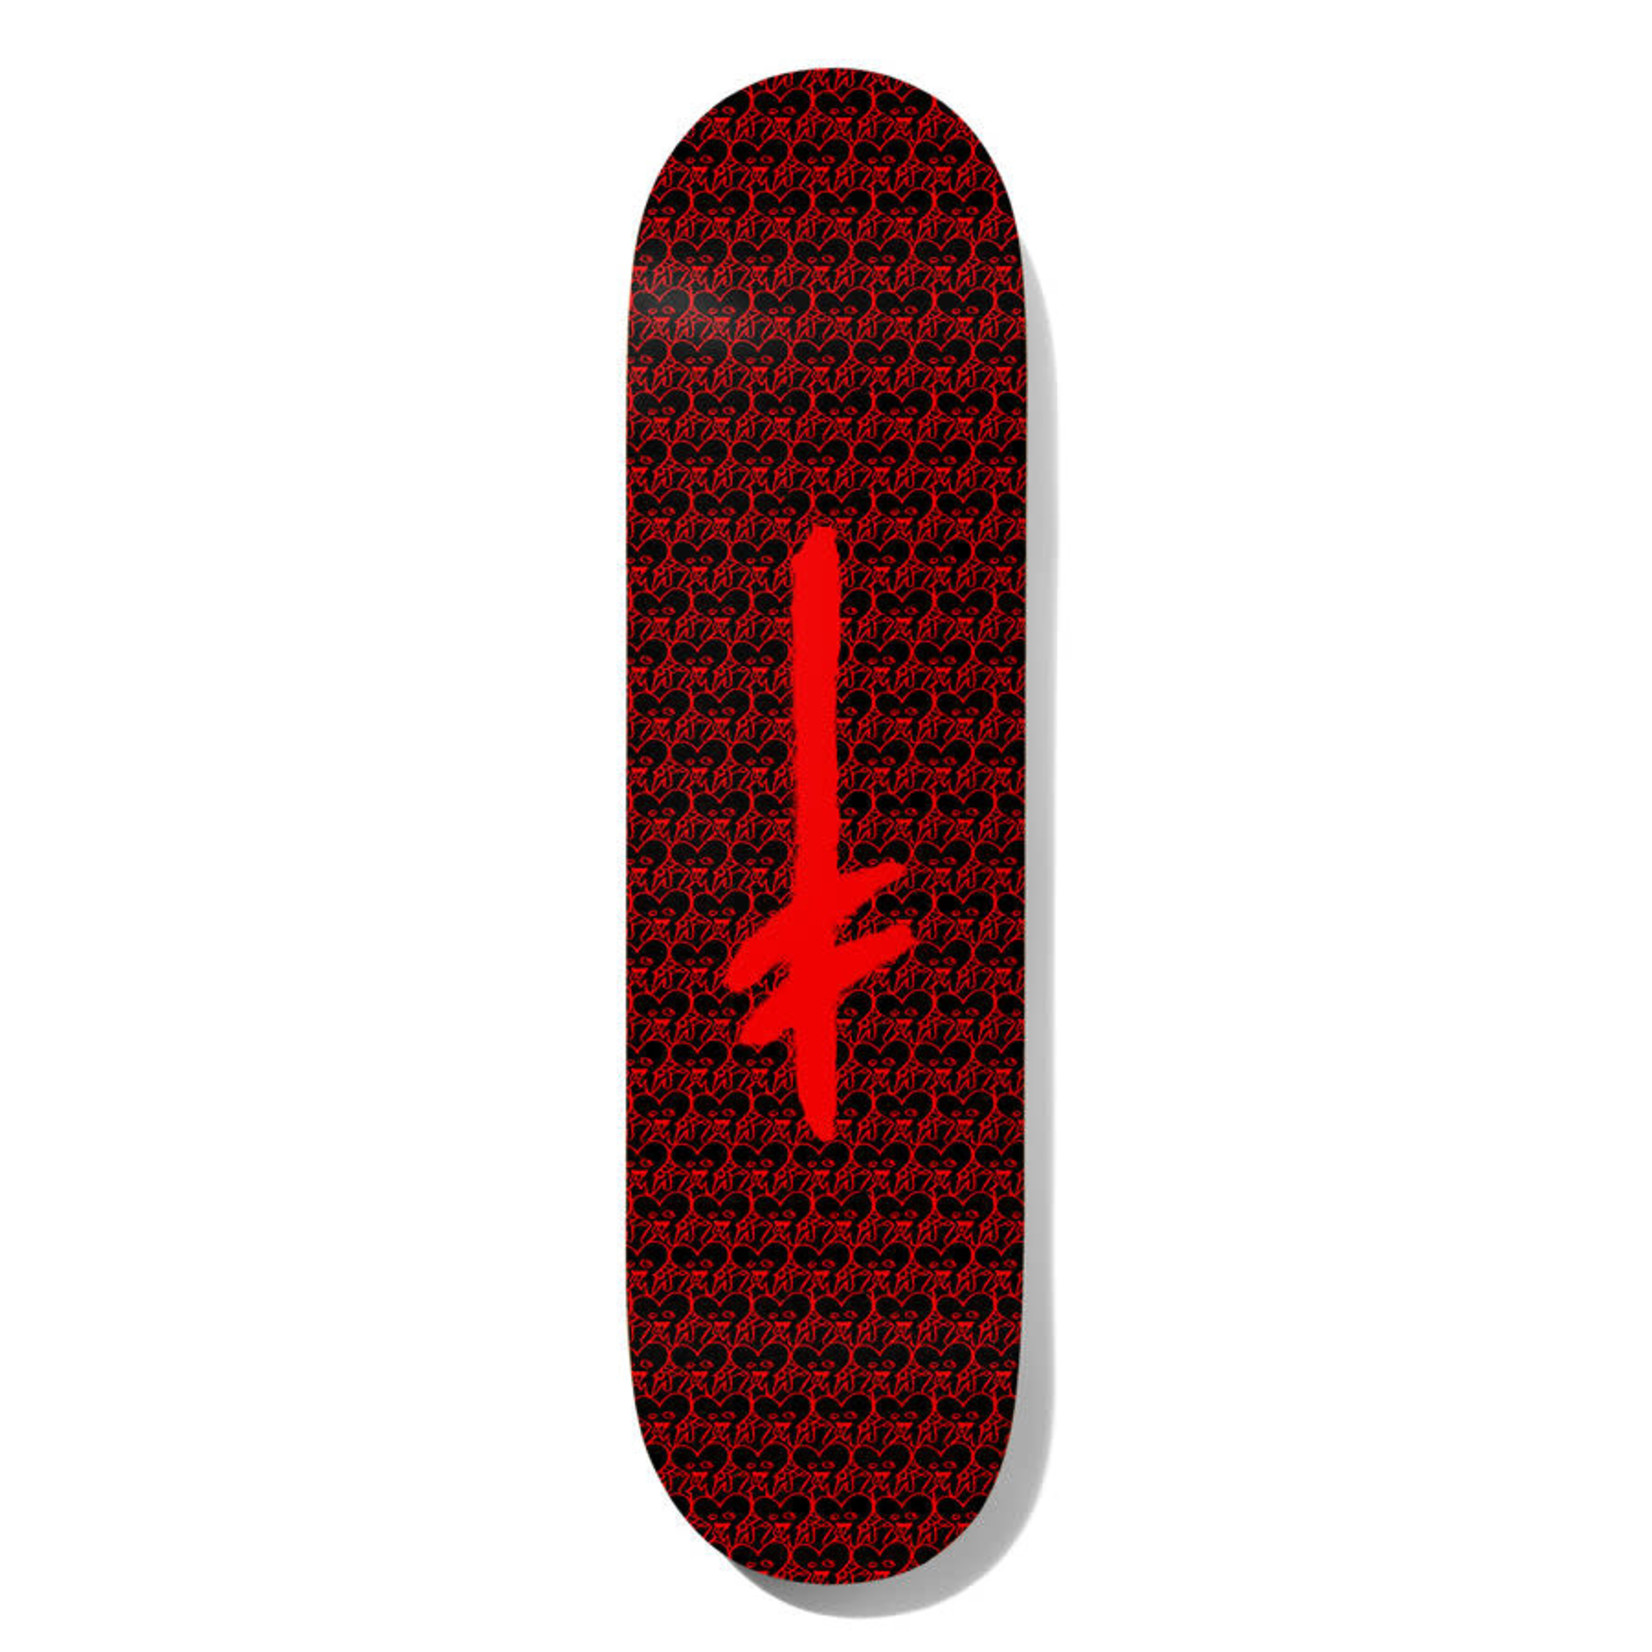 Deathwish Skateboards Deathwish Credo All Over Deck 8.5“